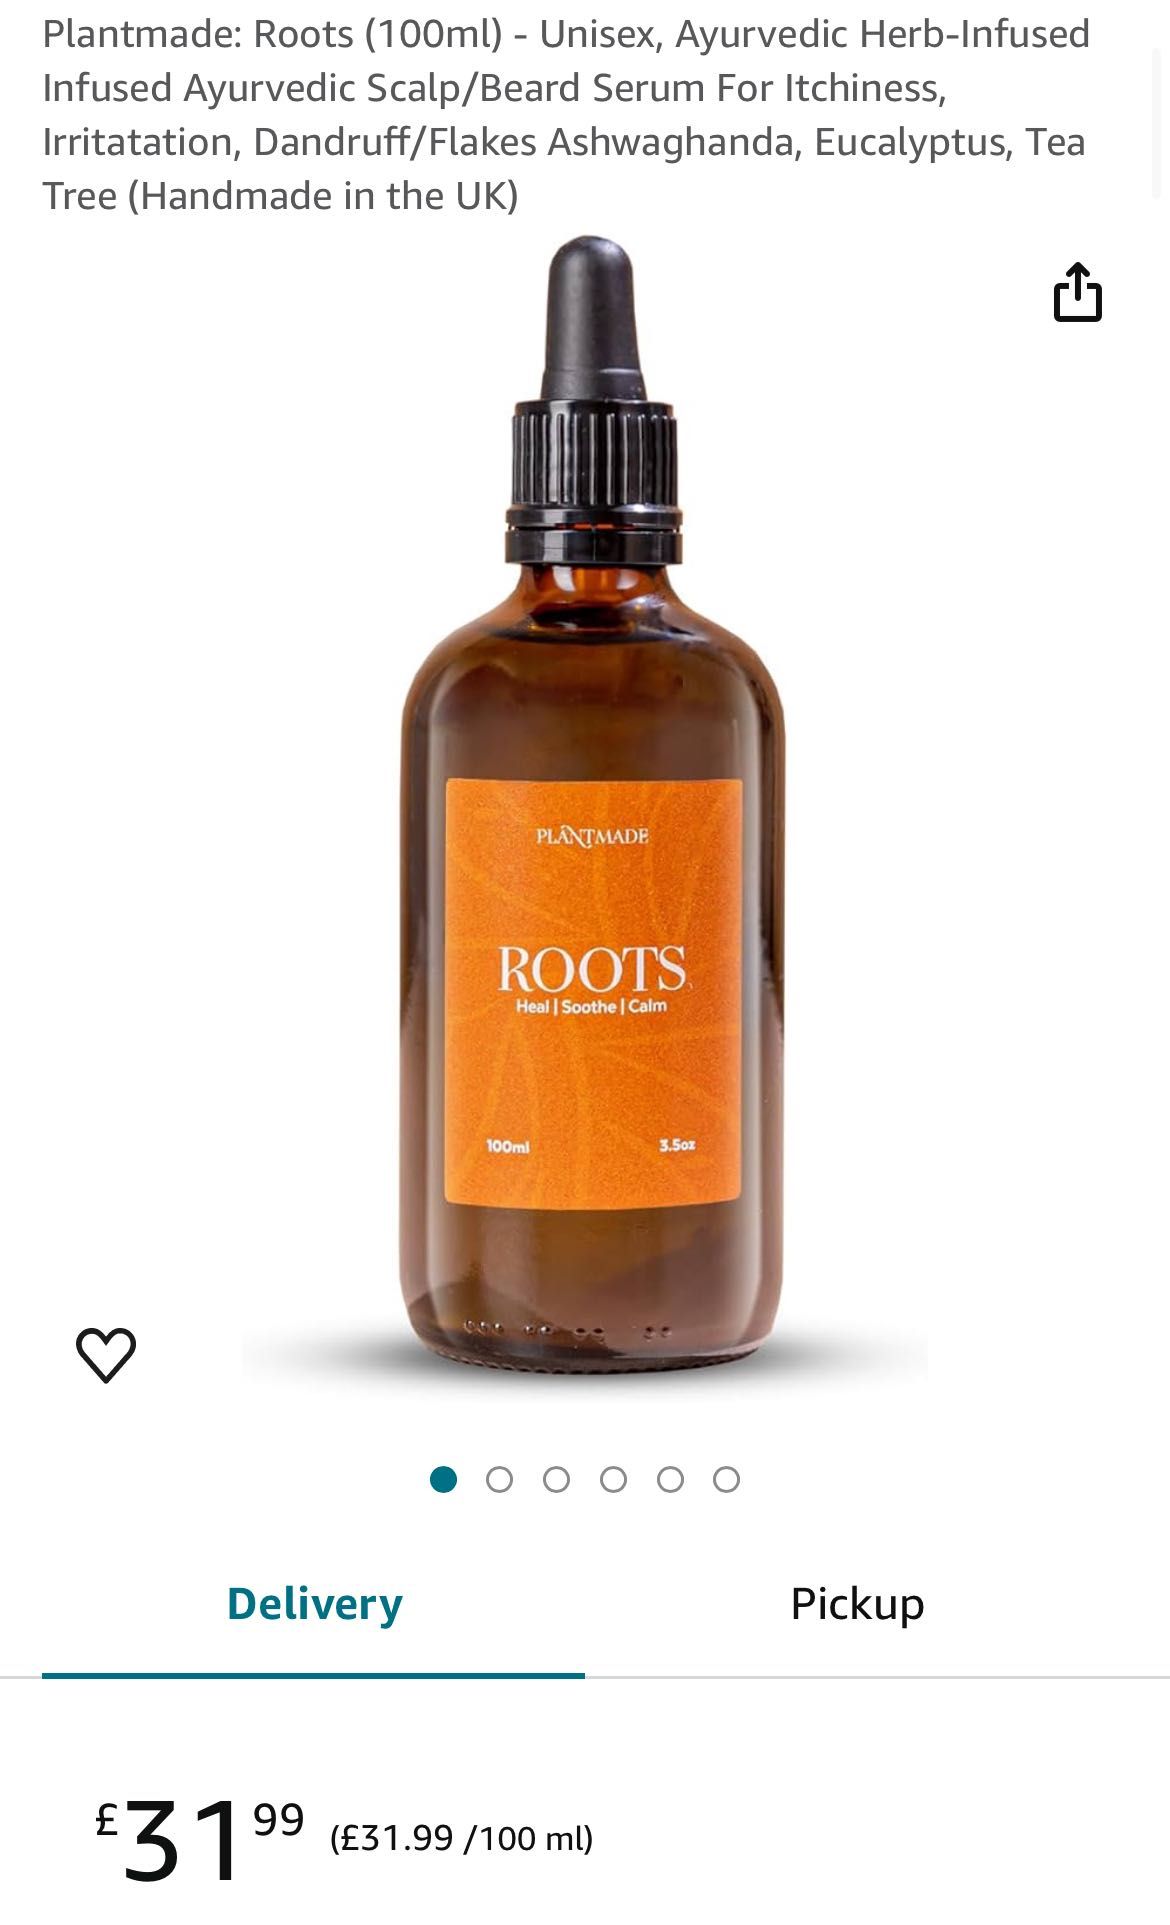 Plantmade Roots naturalne serum do skóry głowy cena skl. 164zl